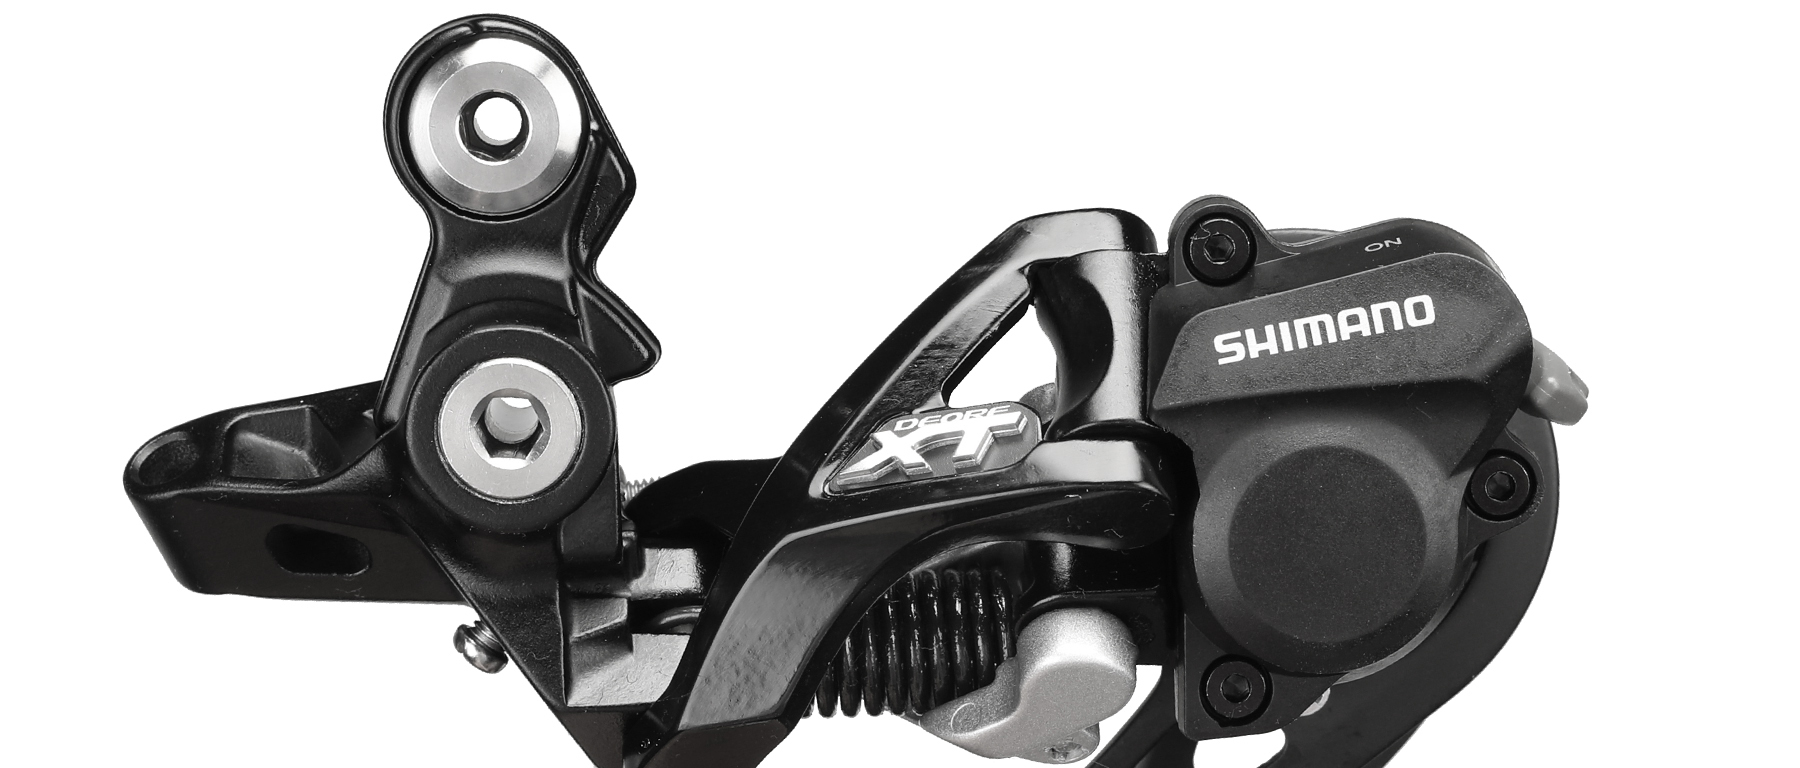 Shimano XT RD-M786 10-Speed Rear Derailleur